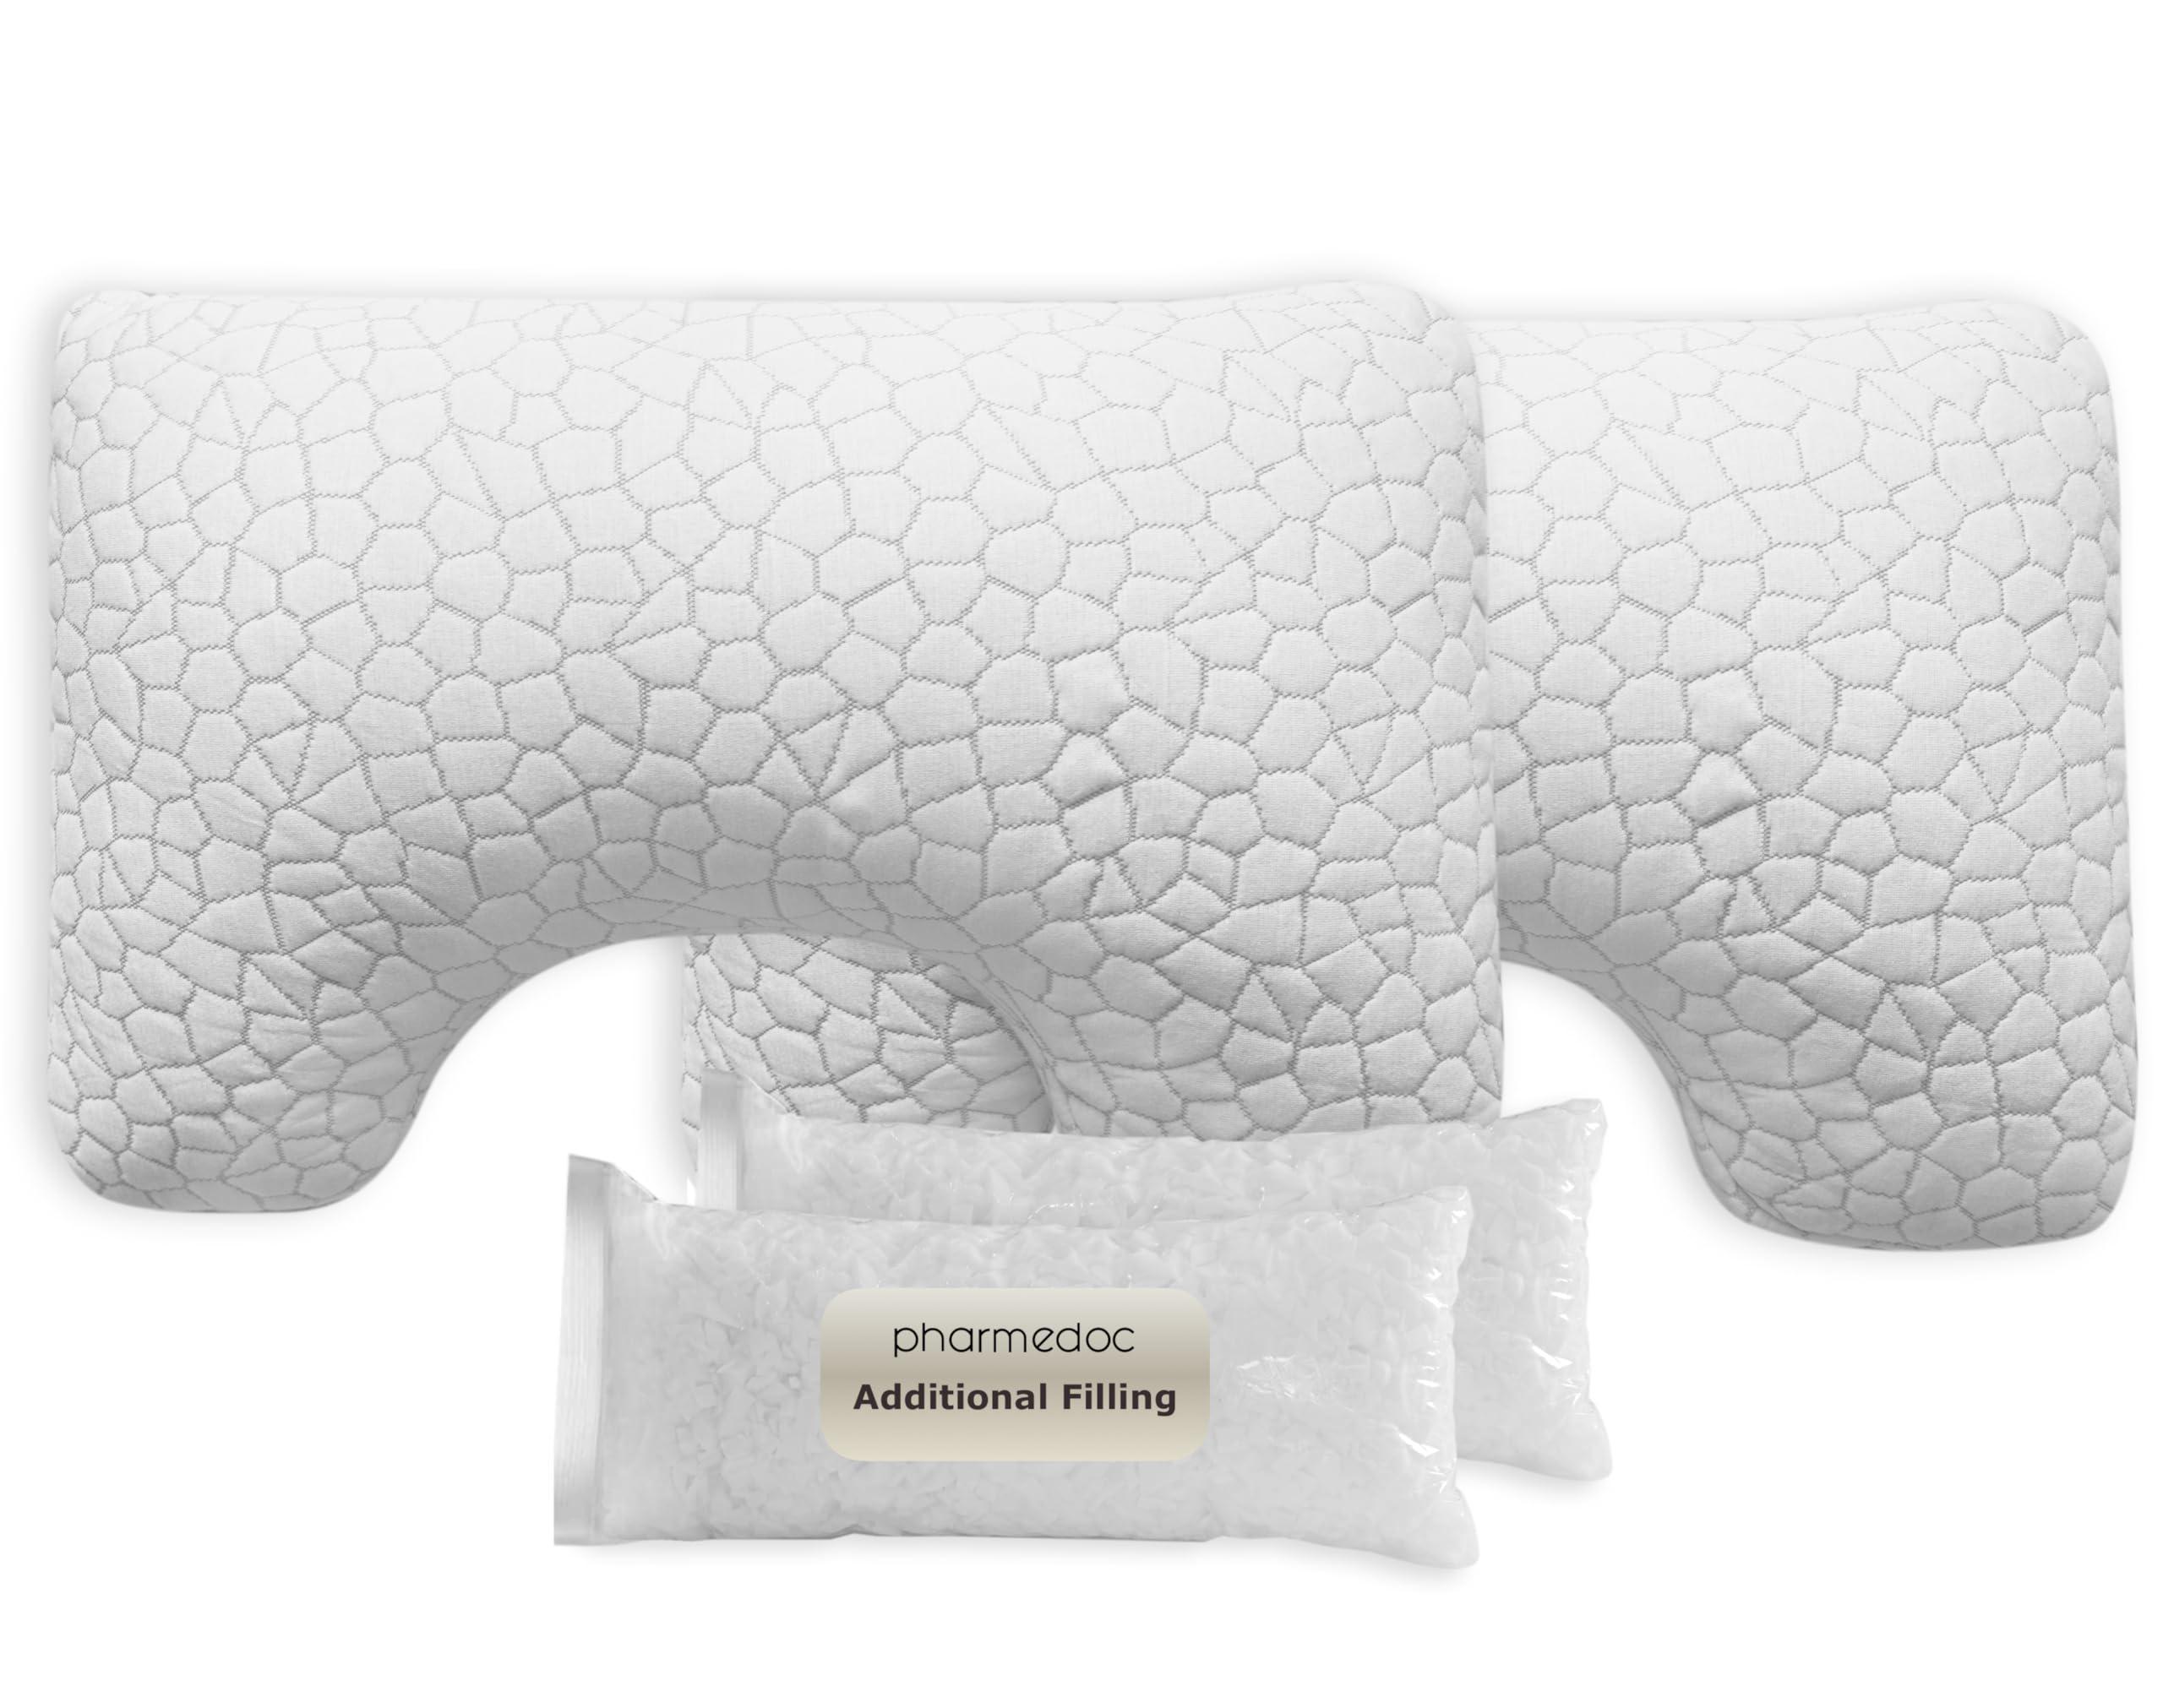 pharmedoc memory foam pillows - side sleeper pillow - curved pillow - deep center - neck pillow for pain relief - queen bed p